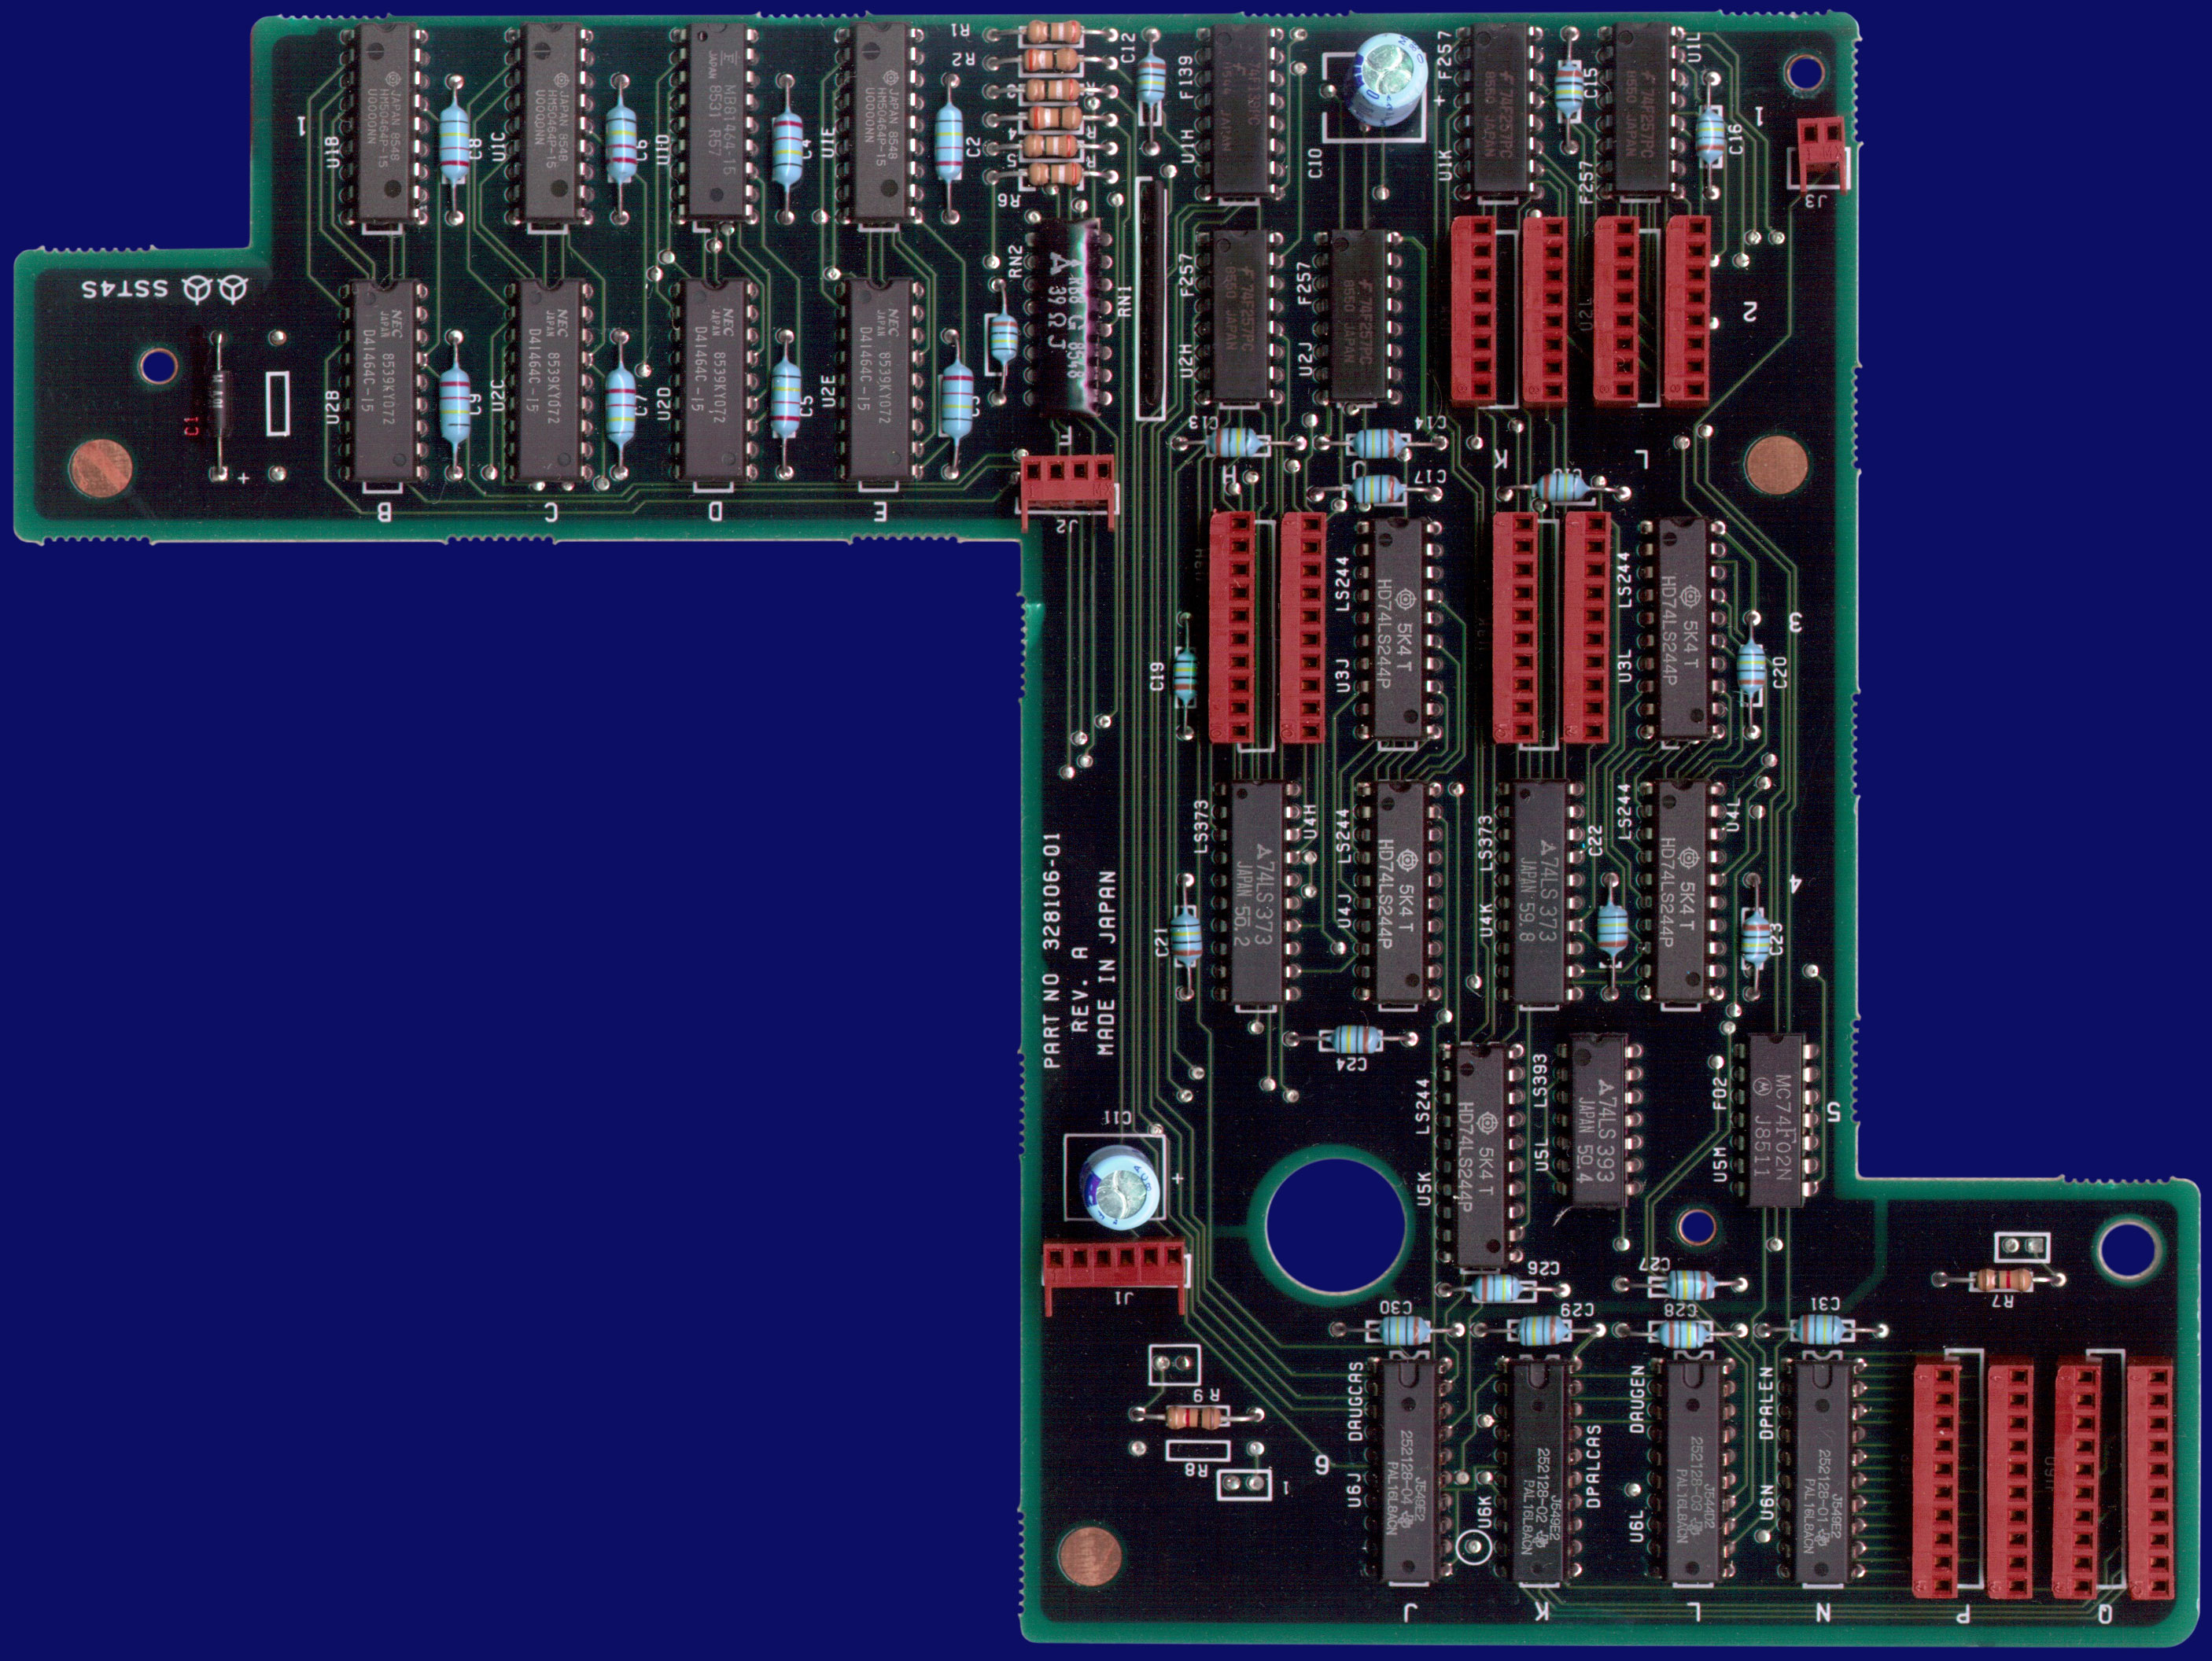 Commodore Amiga 1000 - NTSC rev A daughterboard, front side